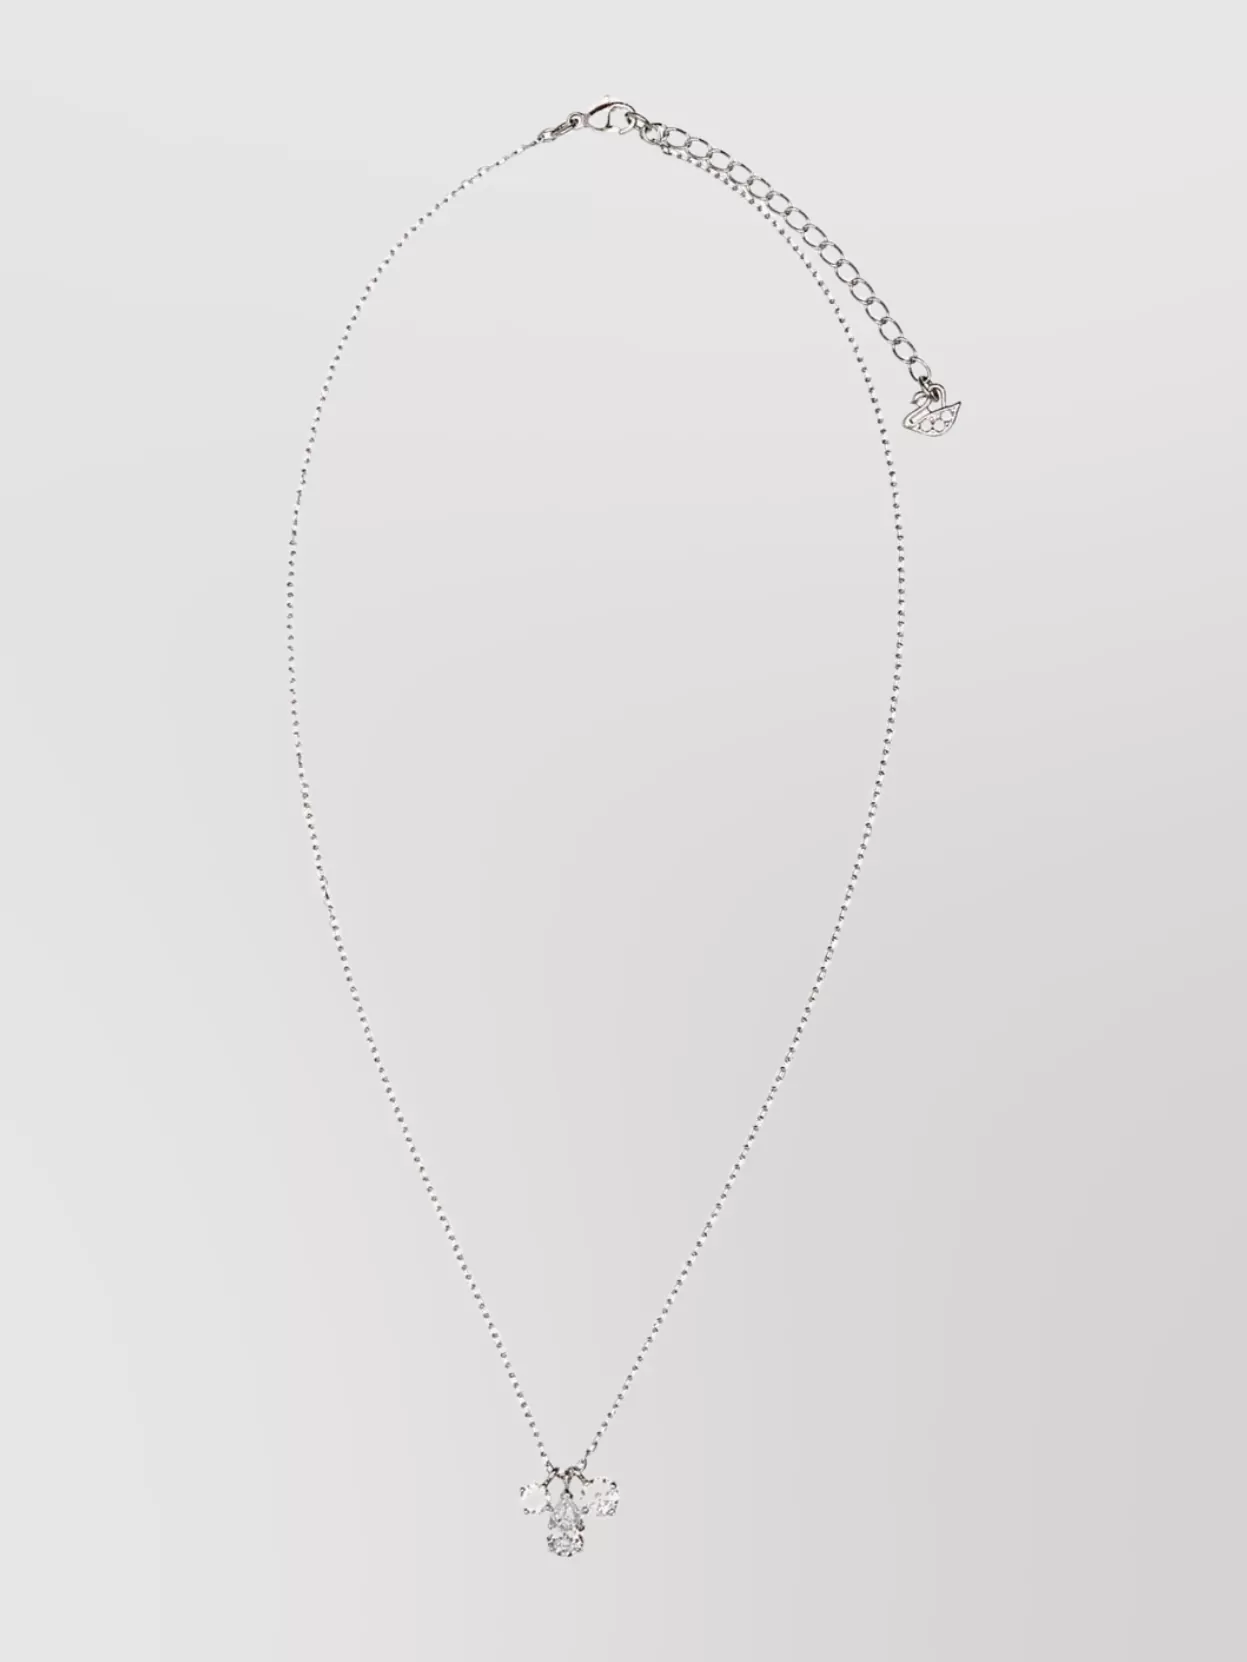 Shop Swarovski Crystal Pendant Necklace Adjustable Chain Length